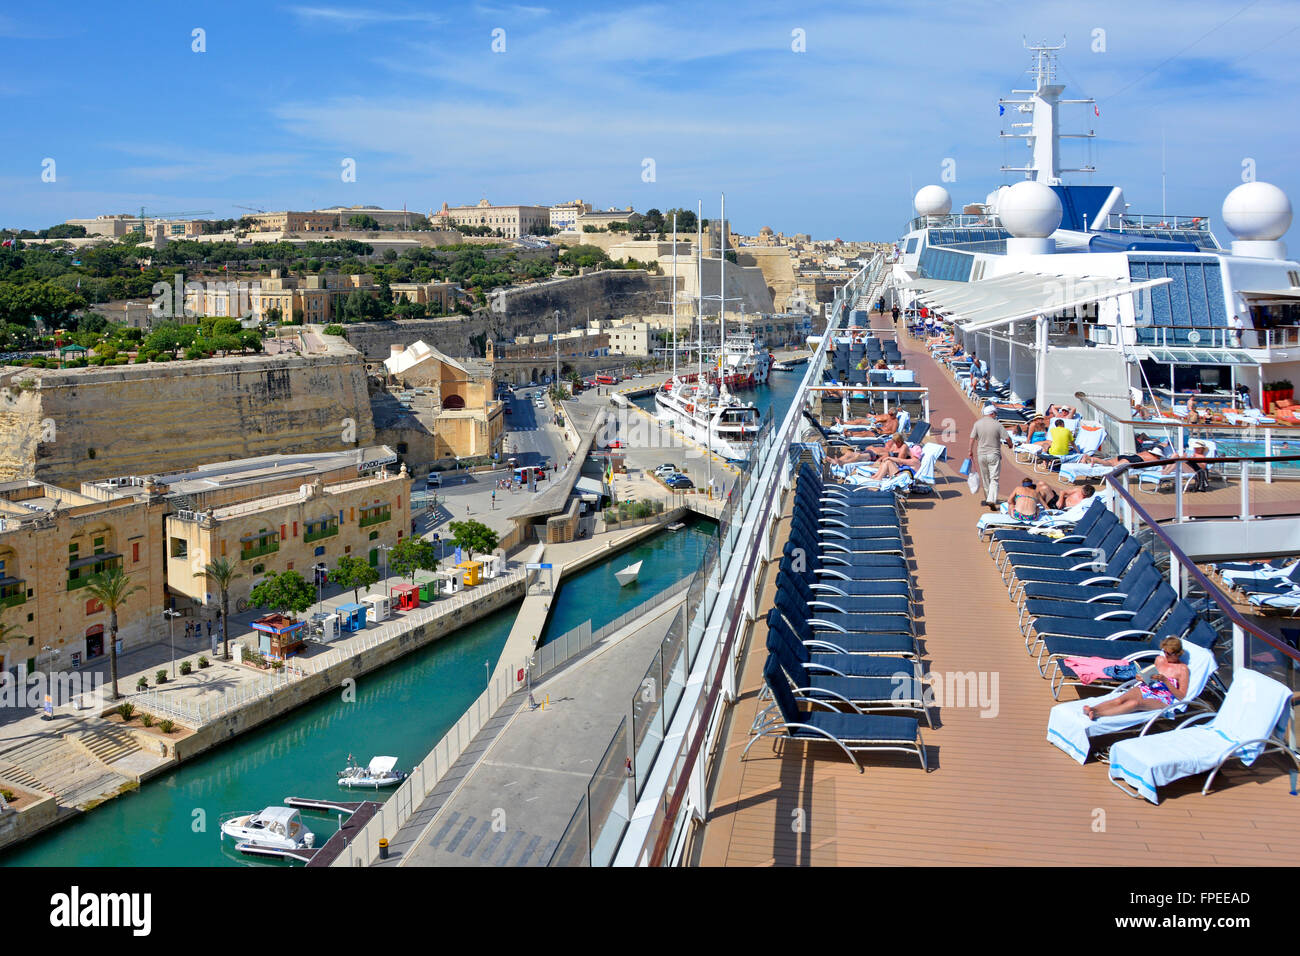 Mediterranean cruise ship liner sun deck of large tall modern ship port & city of Valletta Malta & passengers sunbathing rather than going ashore Stock Photo